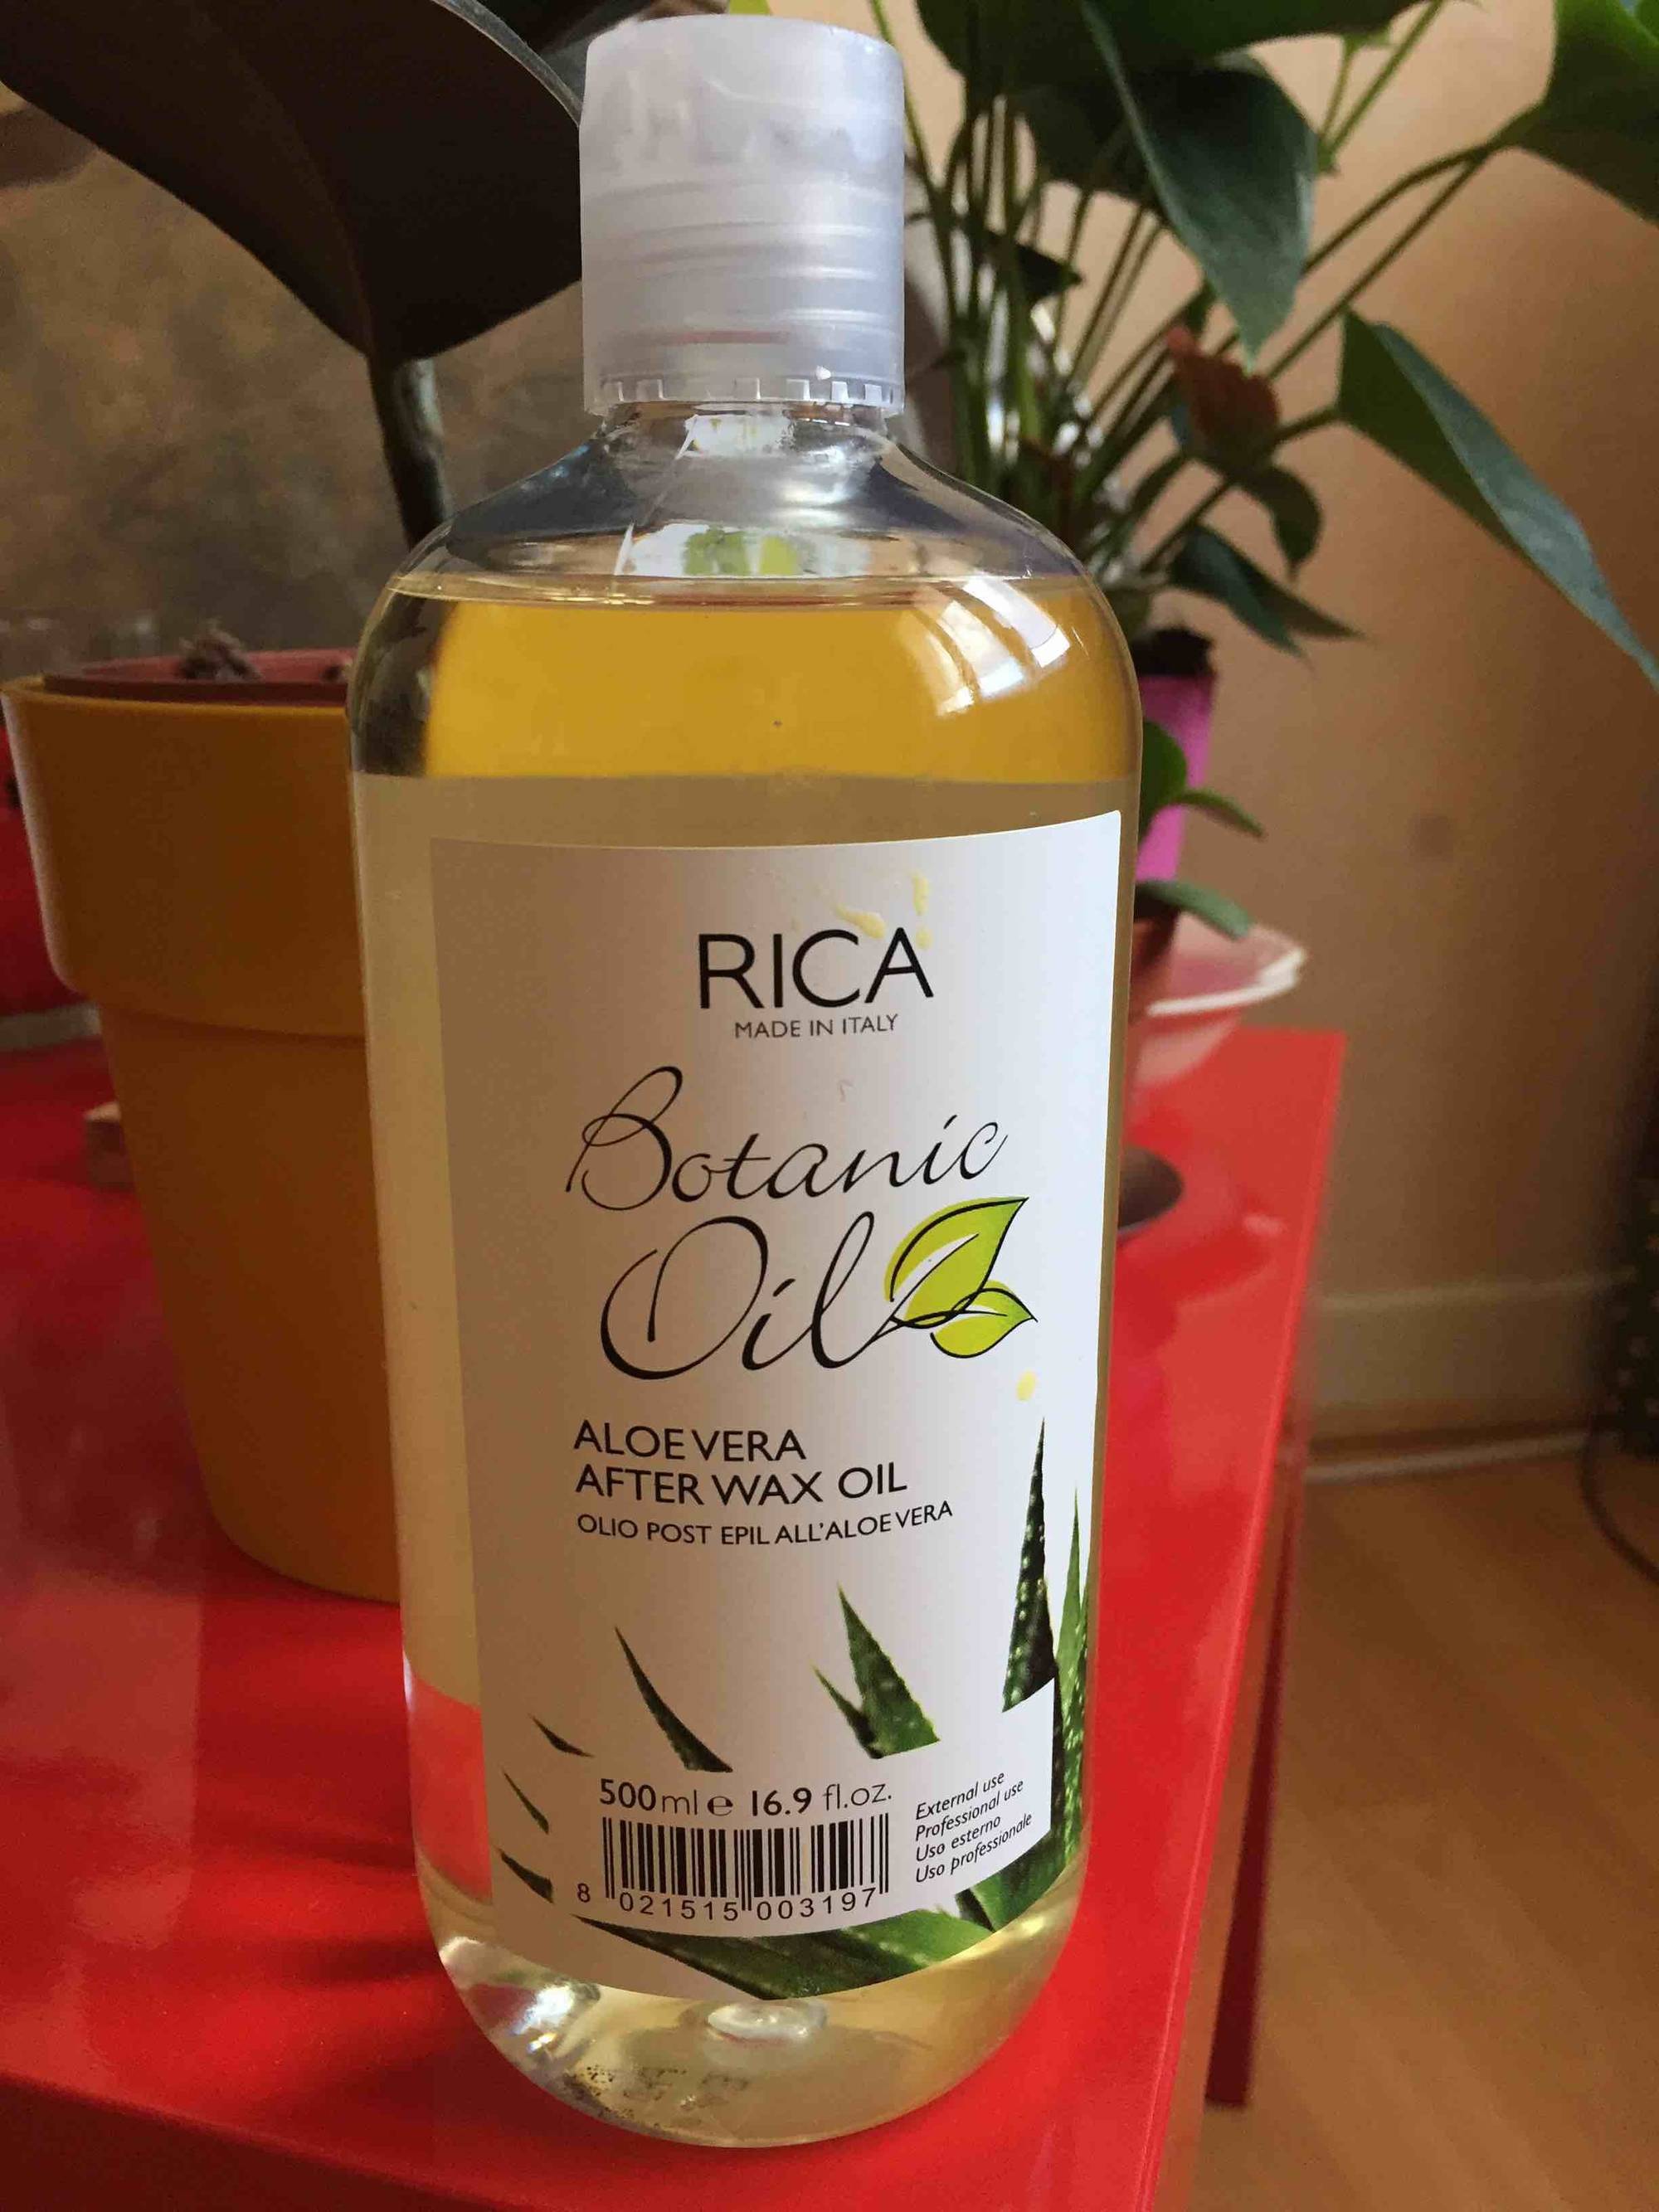 RICA - Botanic oil - Aloe vera after wax oil